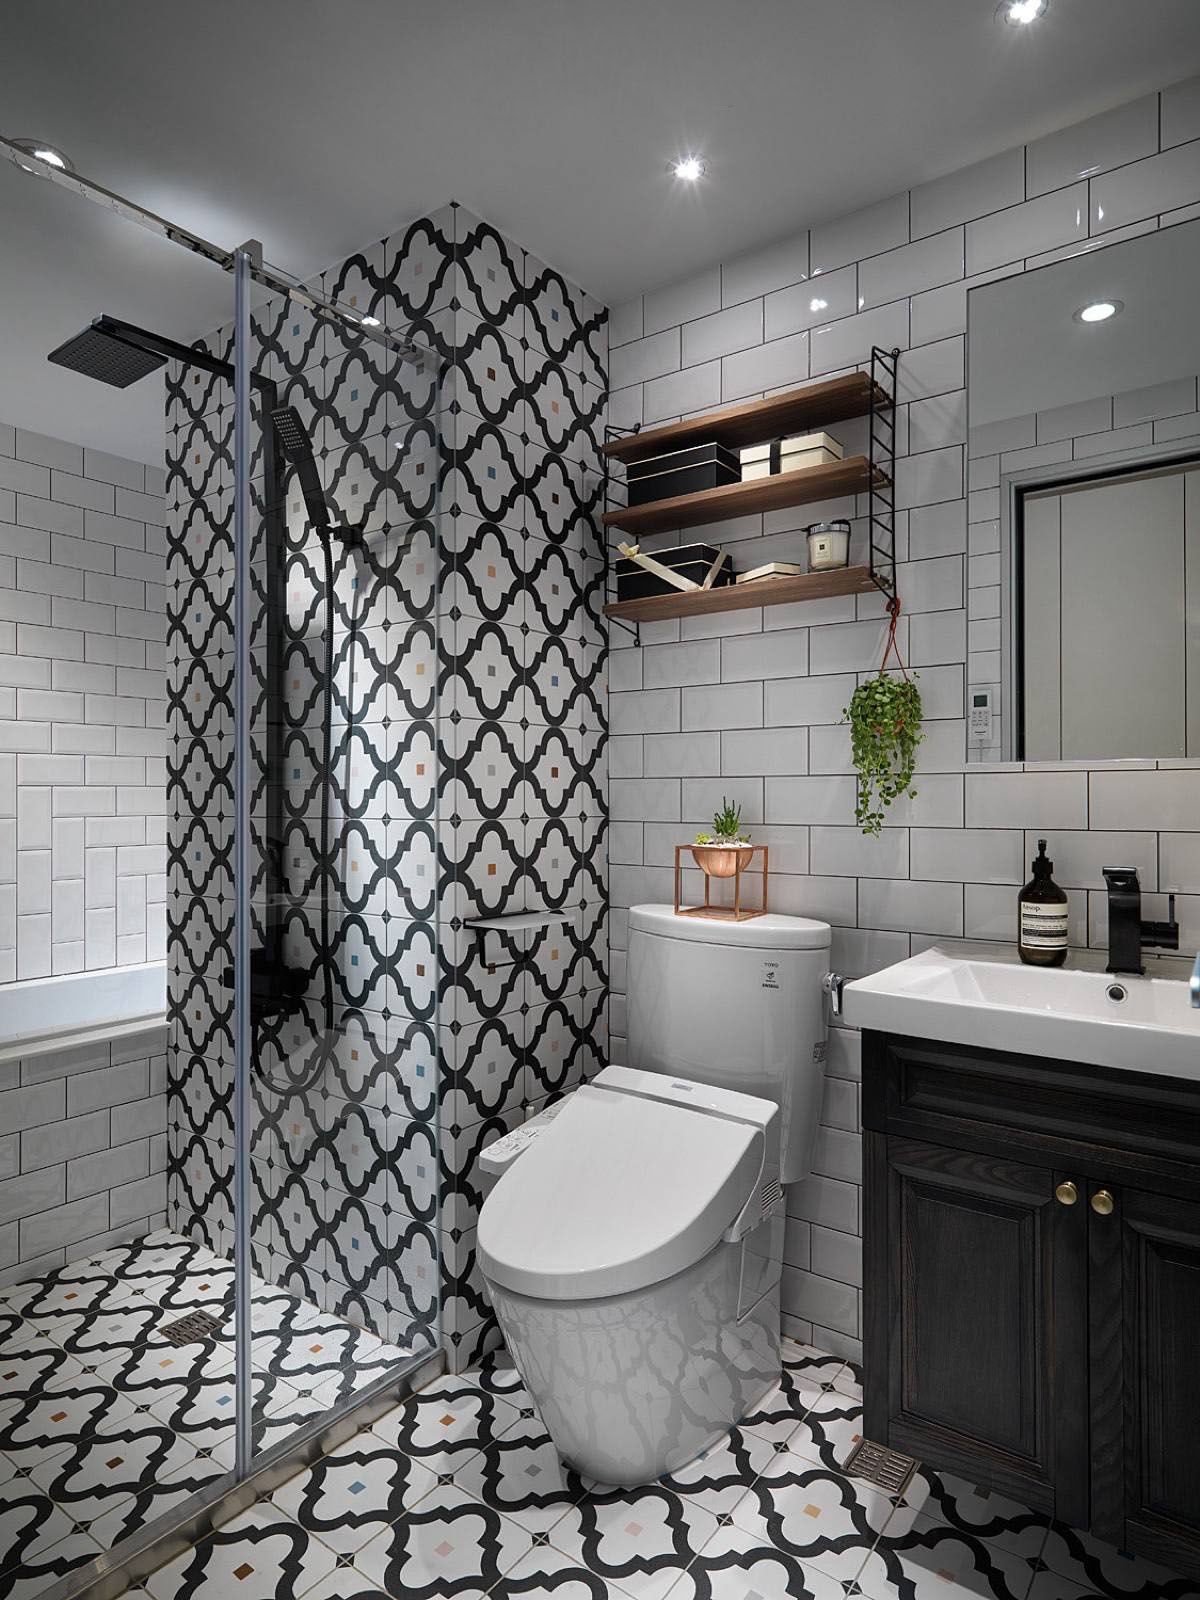 patterned-bathroom-tiles-in-scandinavian-style-bathroom